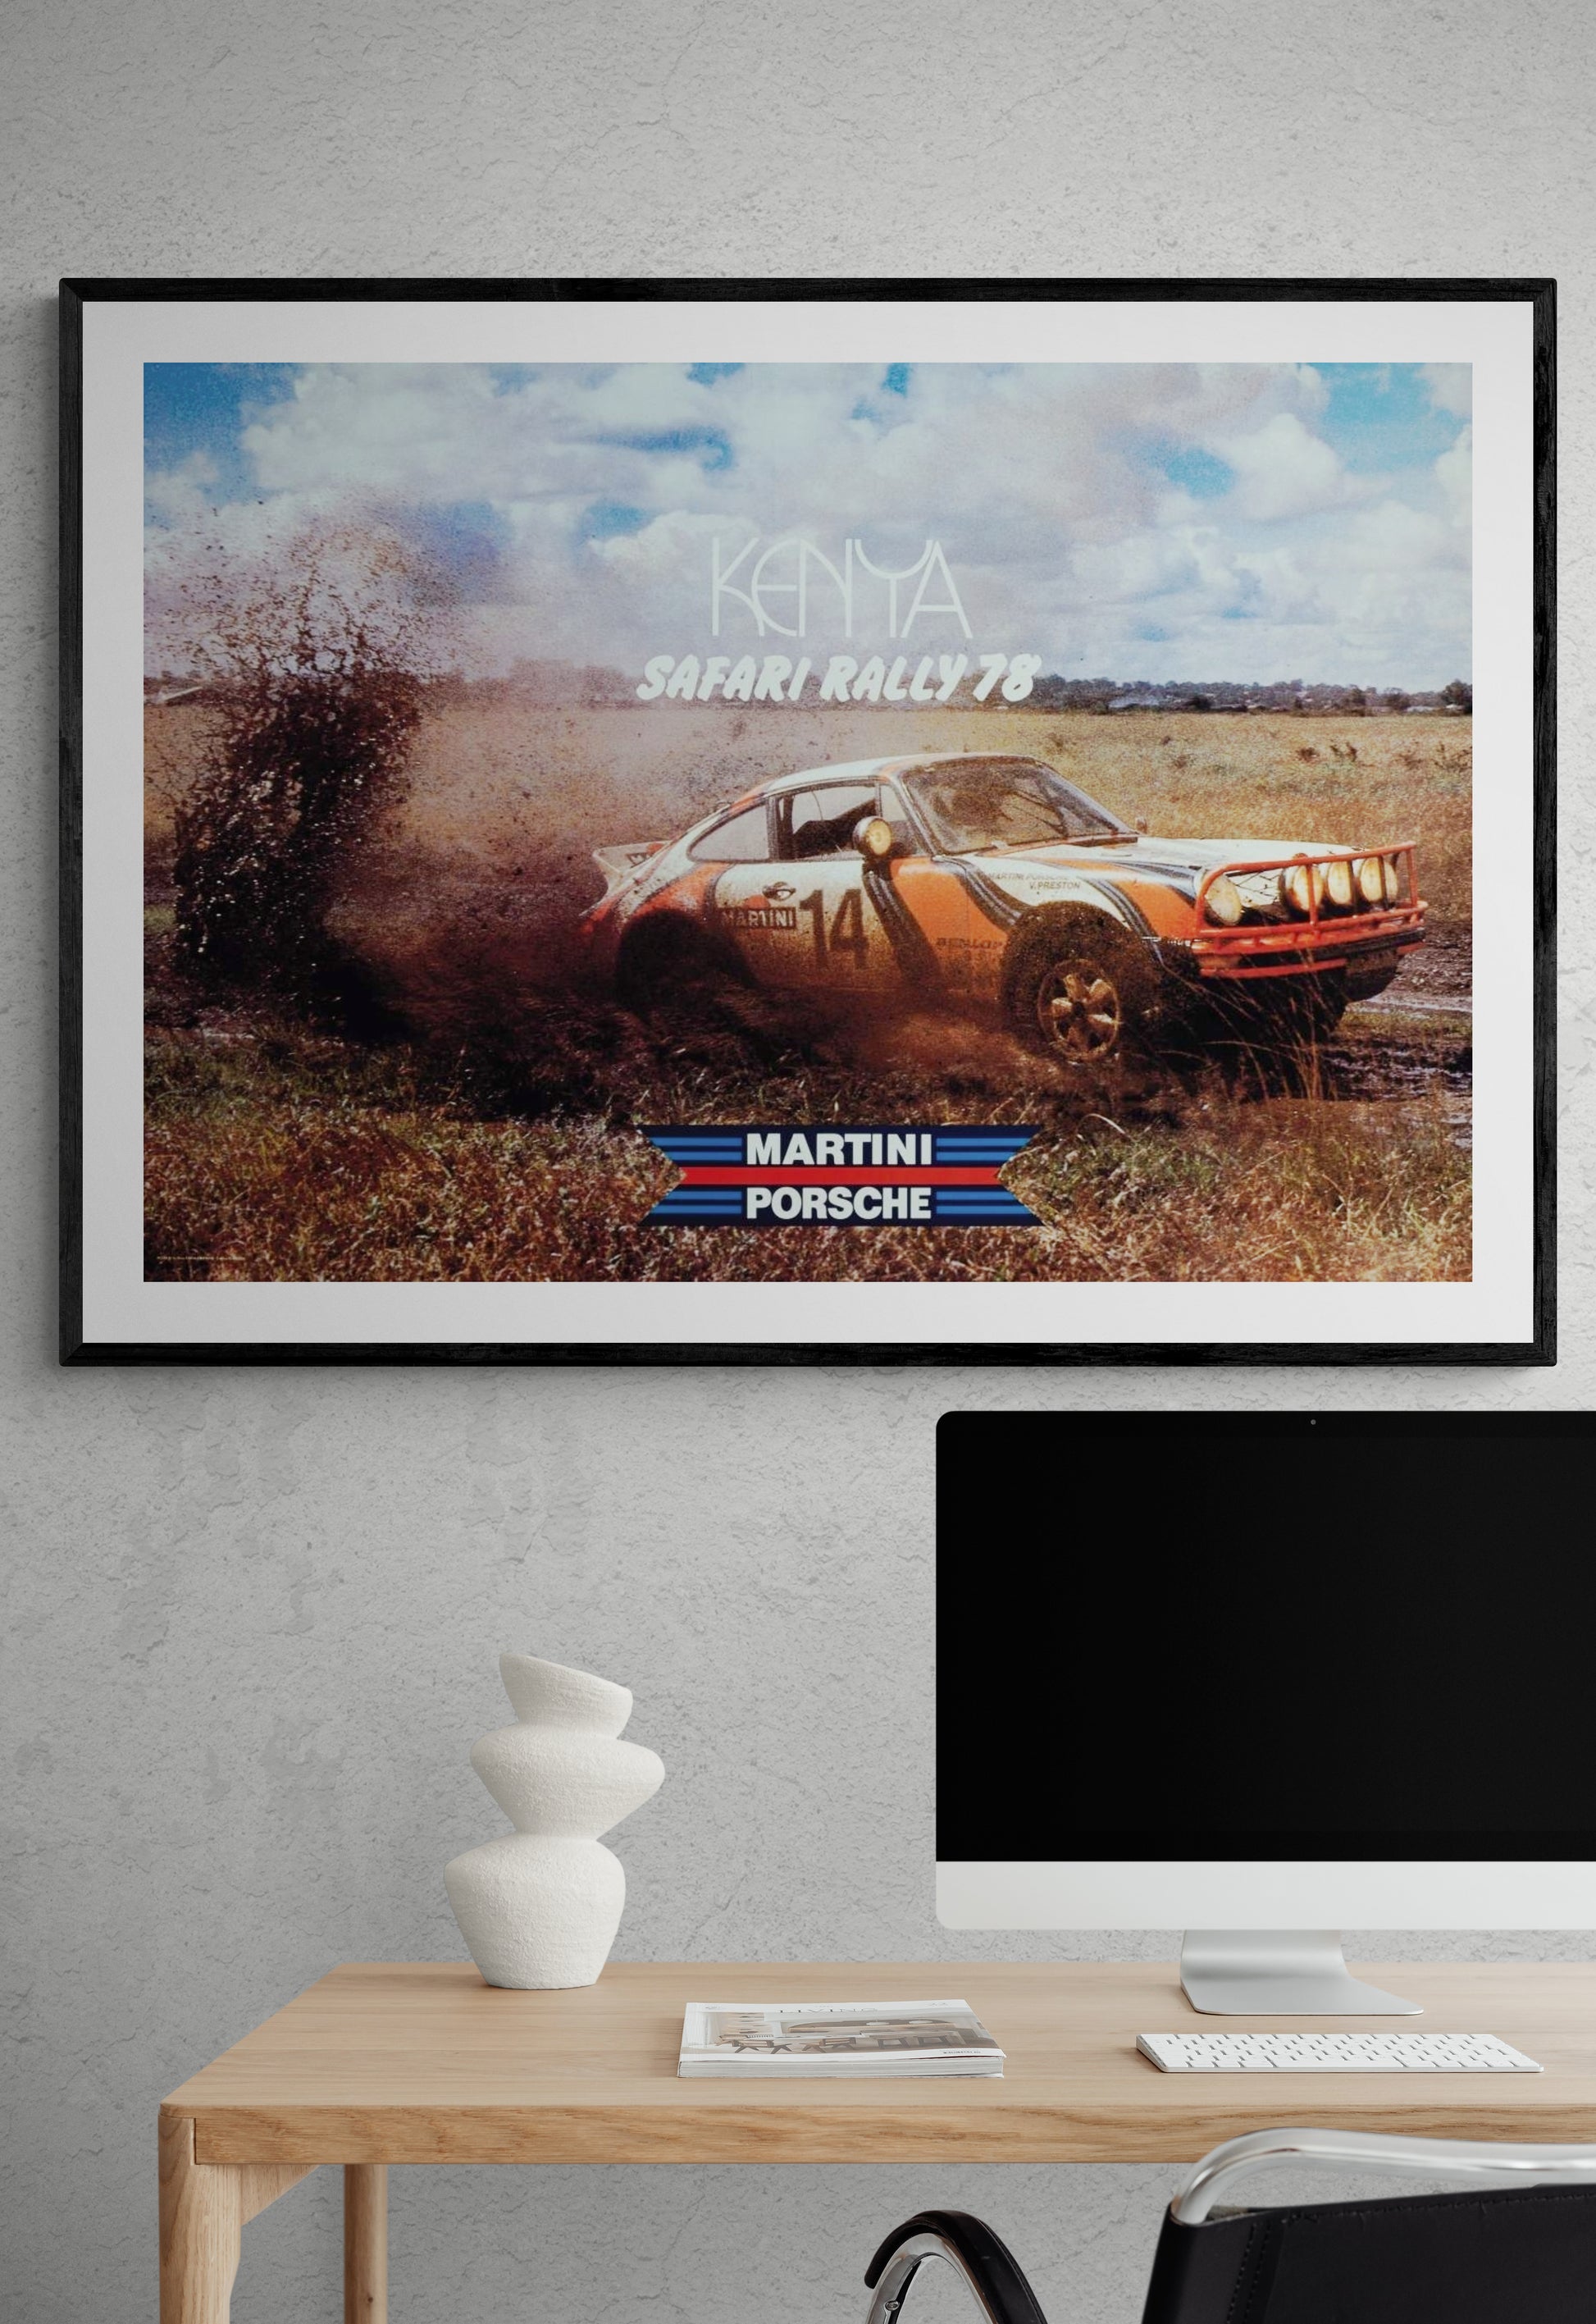 Kenya Rally Safari 1978 Porsche poster